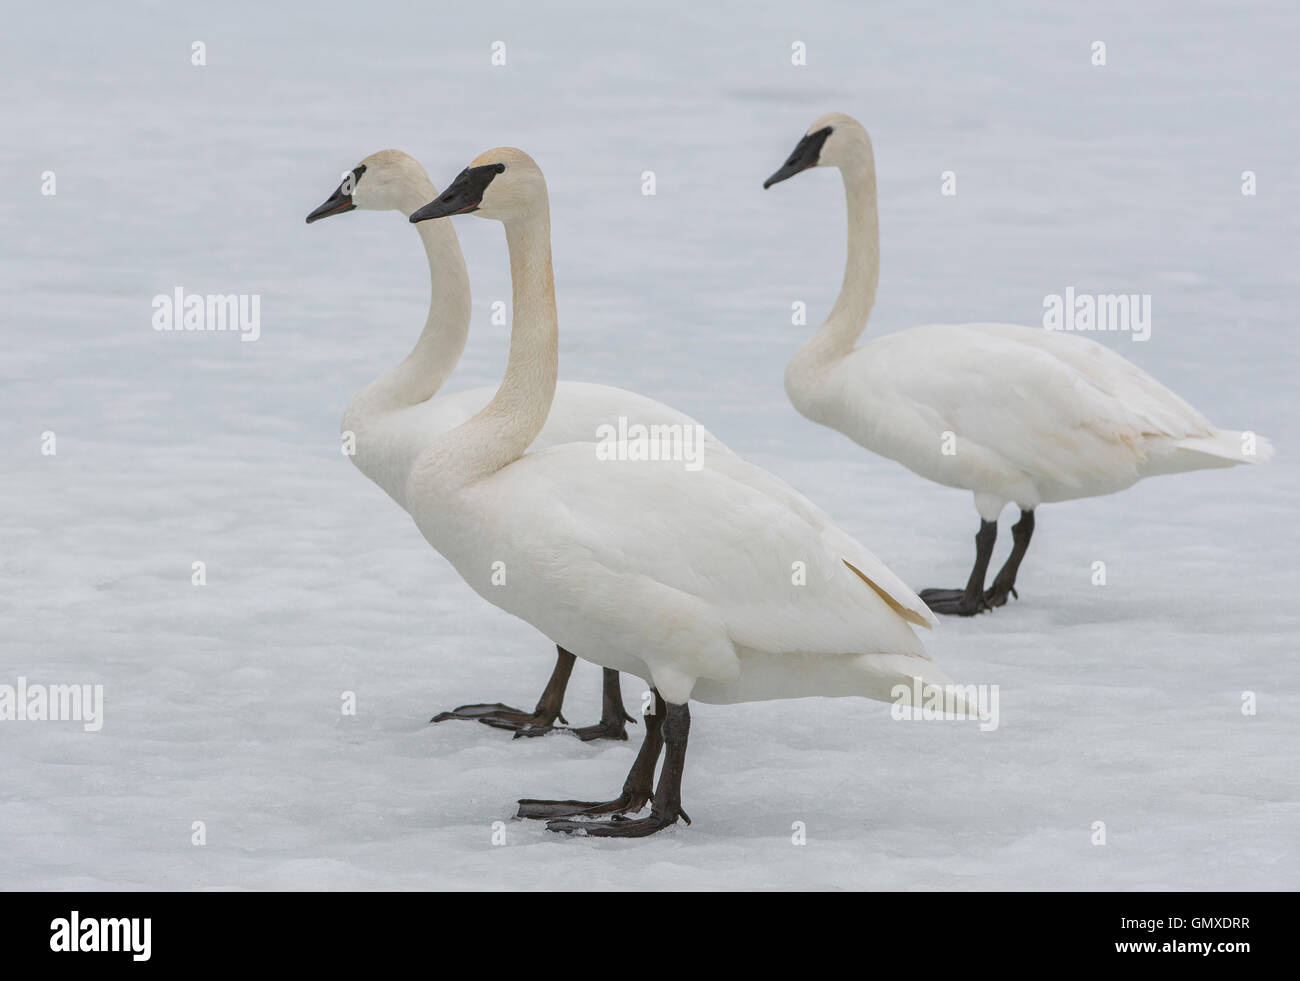 Trumpeter Swans (Cygnus buccinator) standing on ice, North America Stock Photo